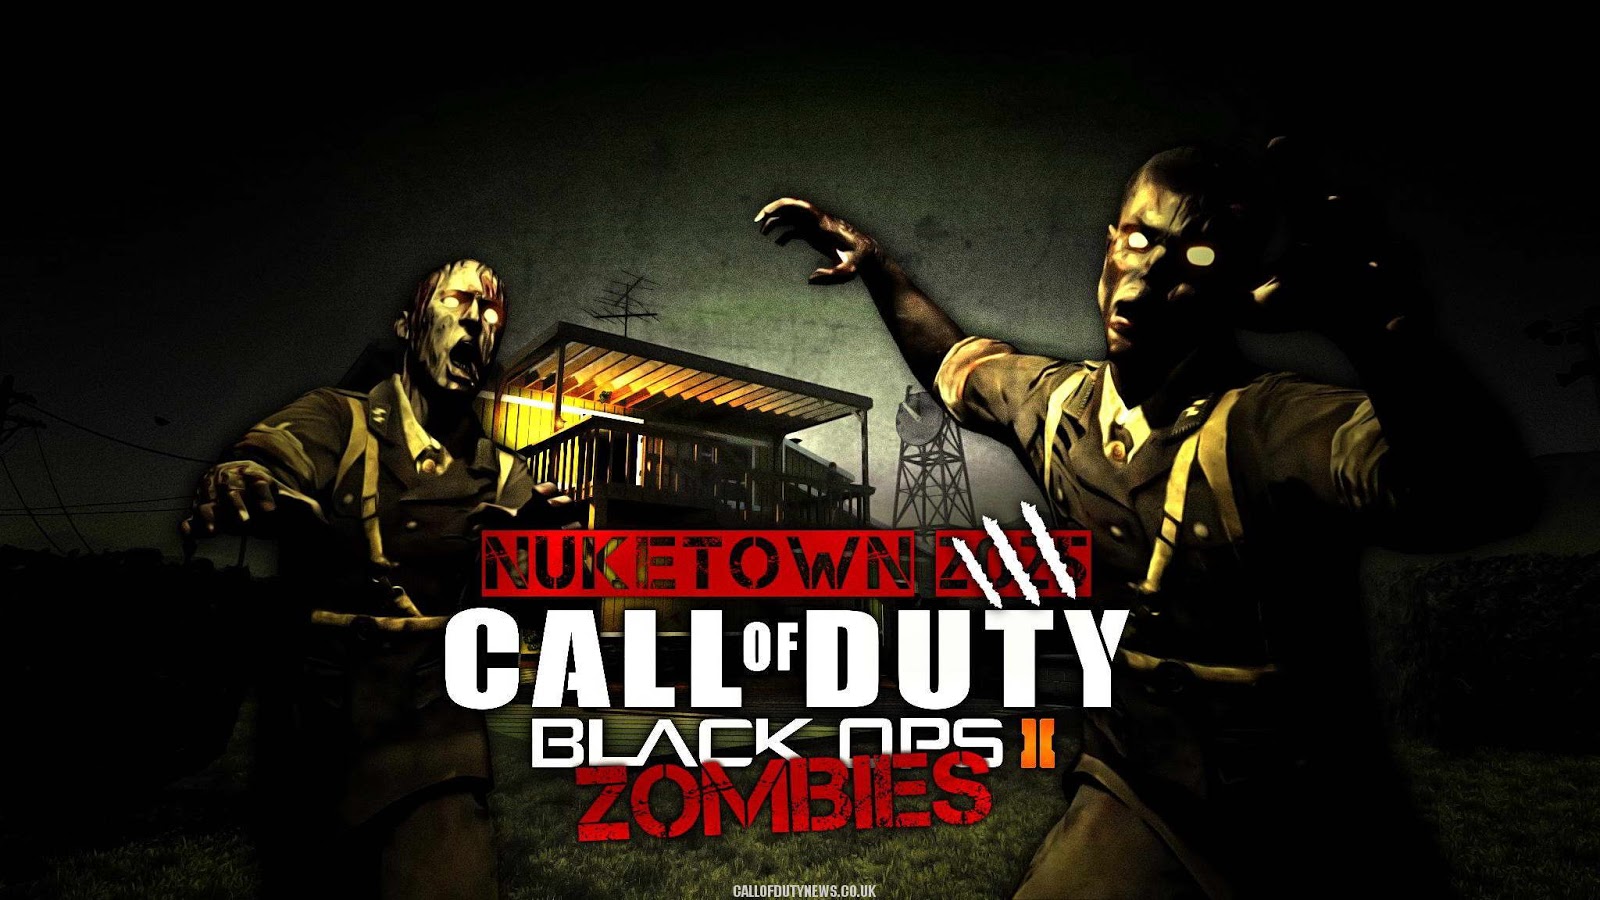 Call Of Duty Black Ops 2 Zombies Wallpaper - wallpaper.